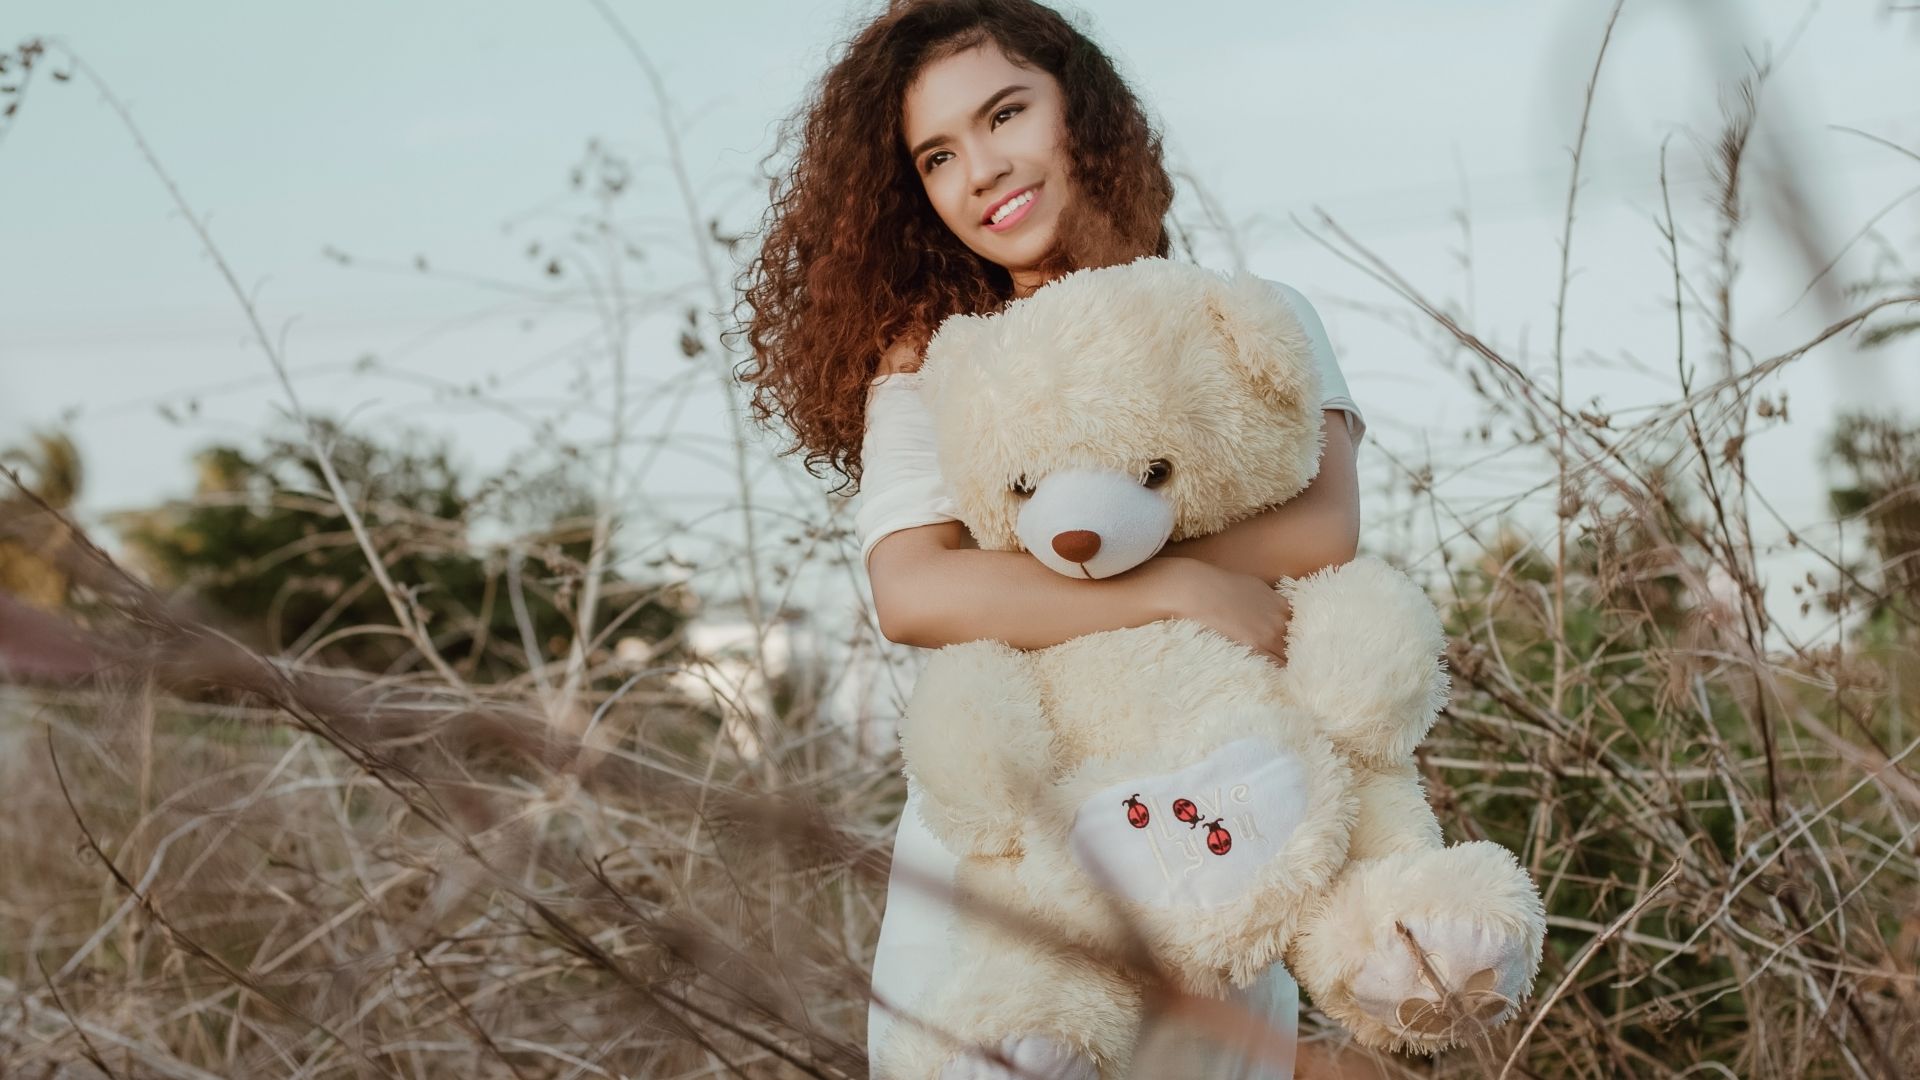 Wallpaper Red head, girl model, outdoor, teddy bear